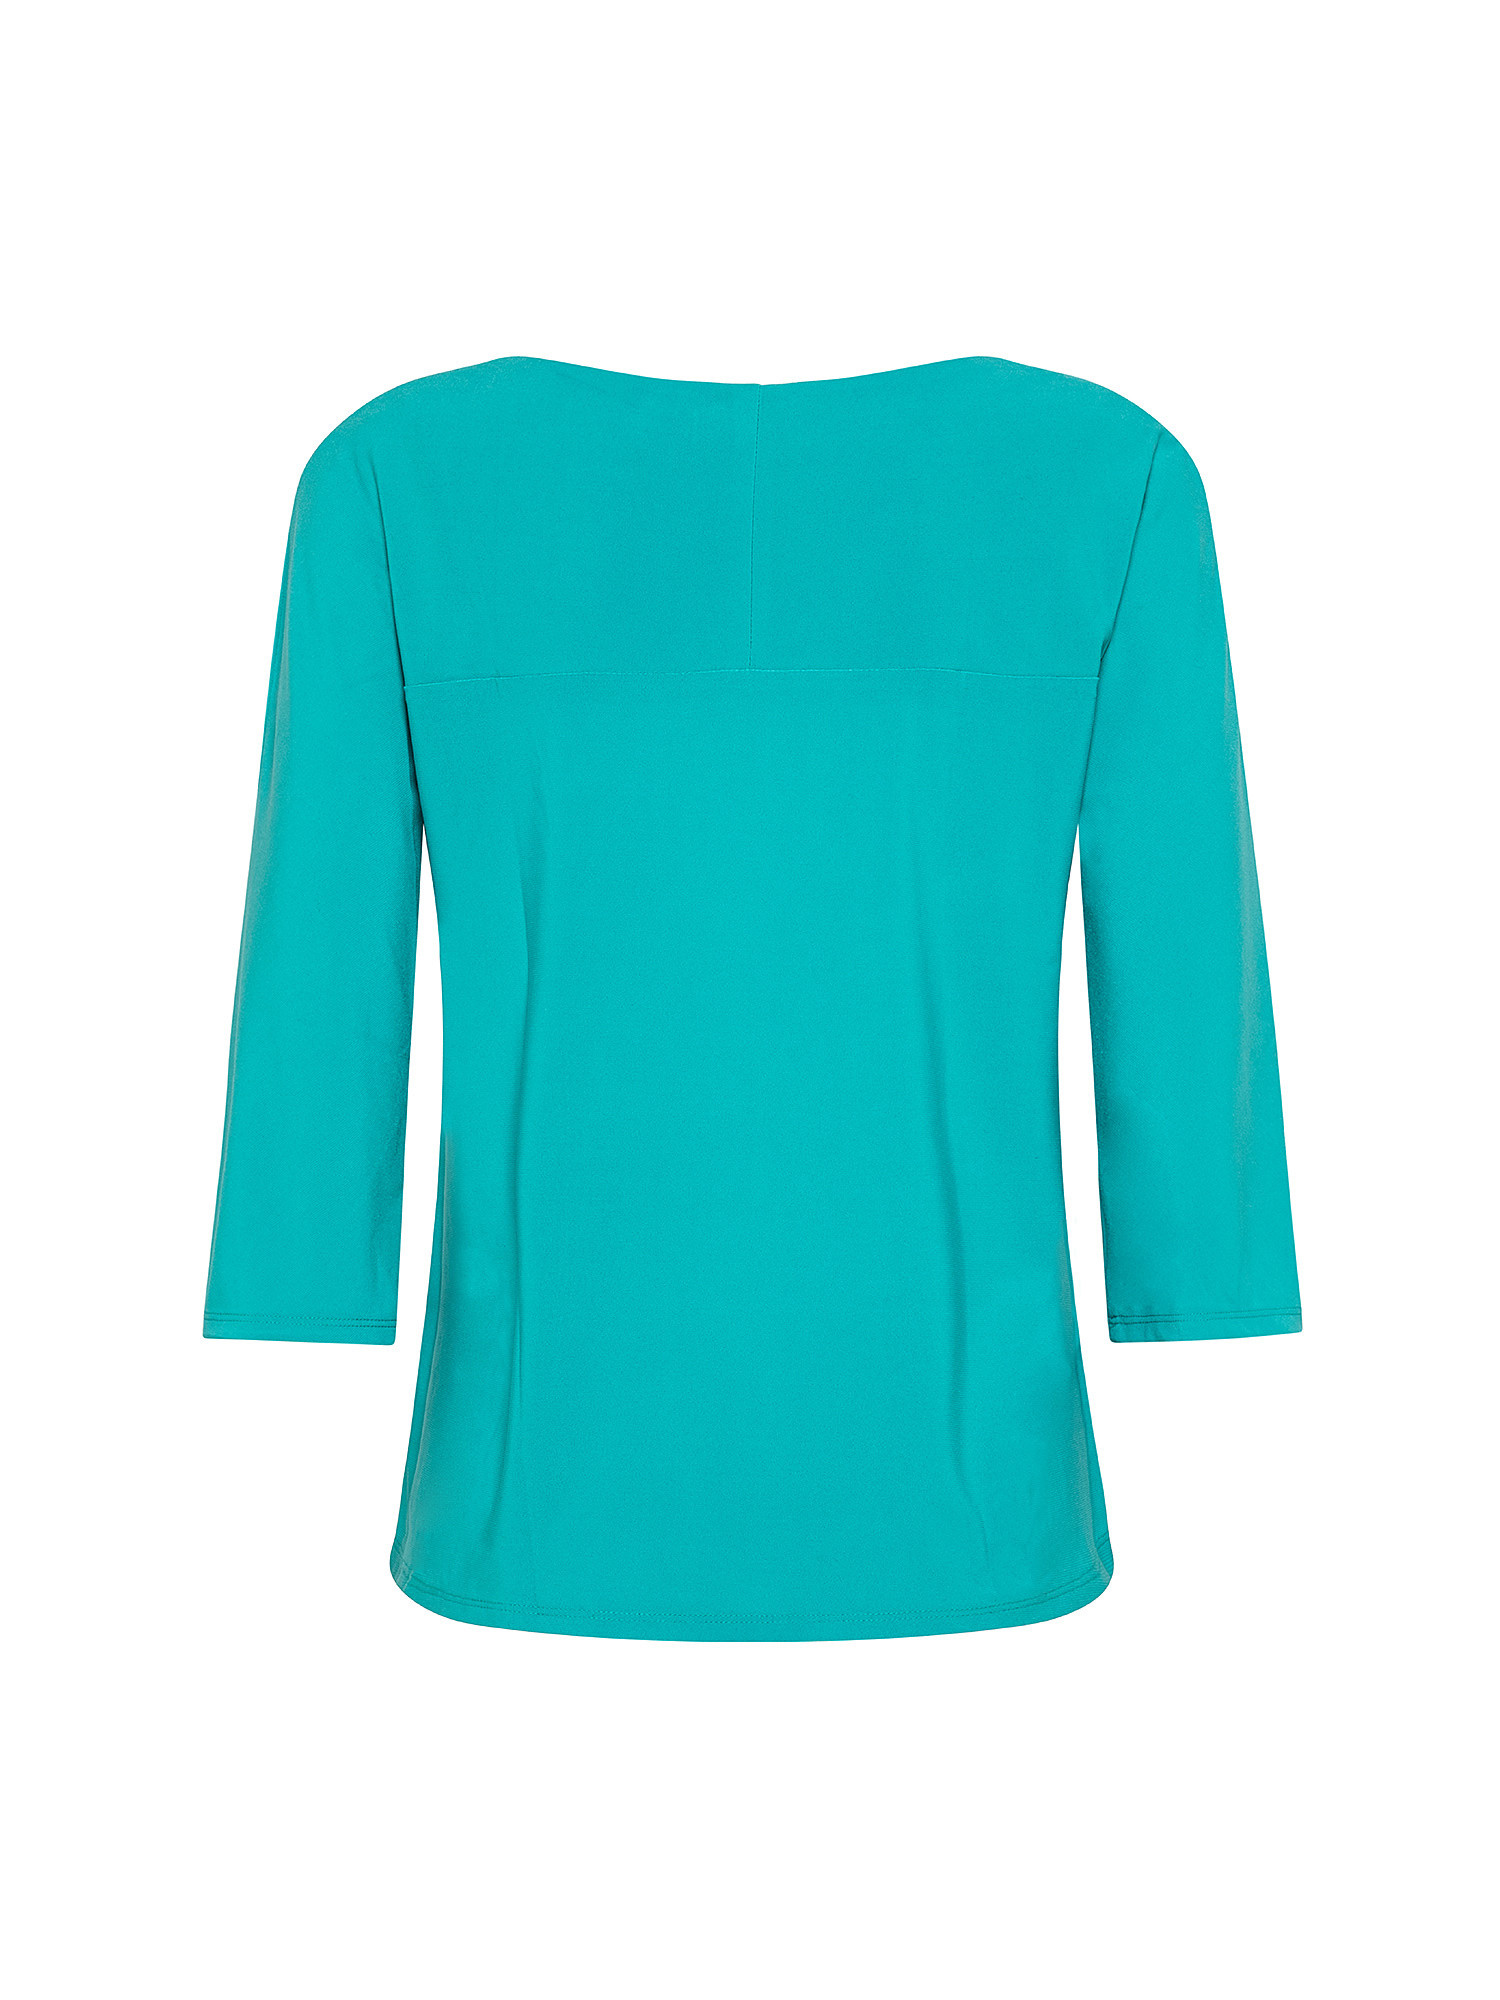 Fluid 3/4 sleeve t-shirt, Turquoise, large image number 1